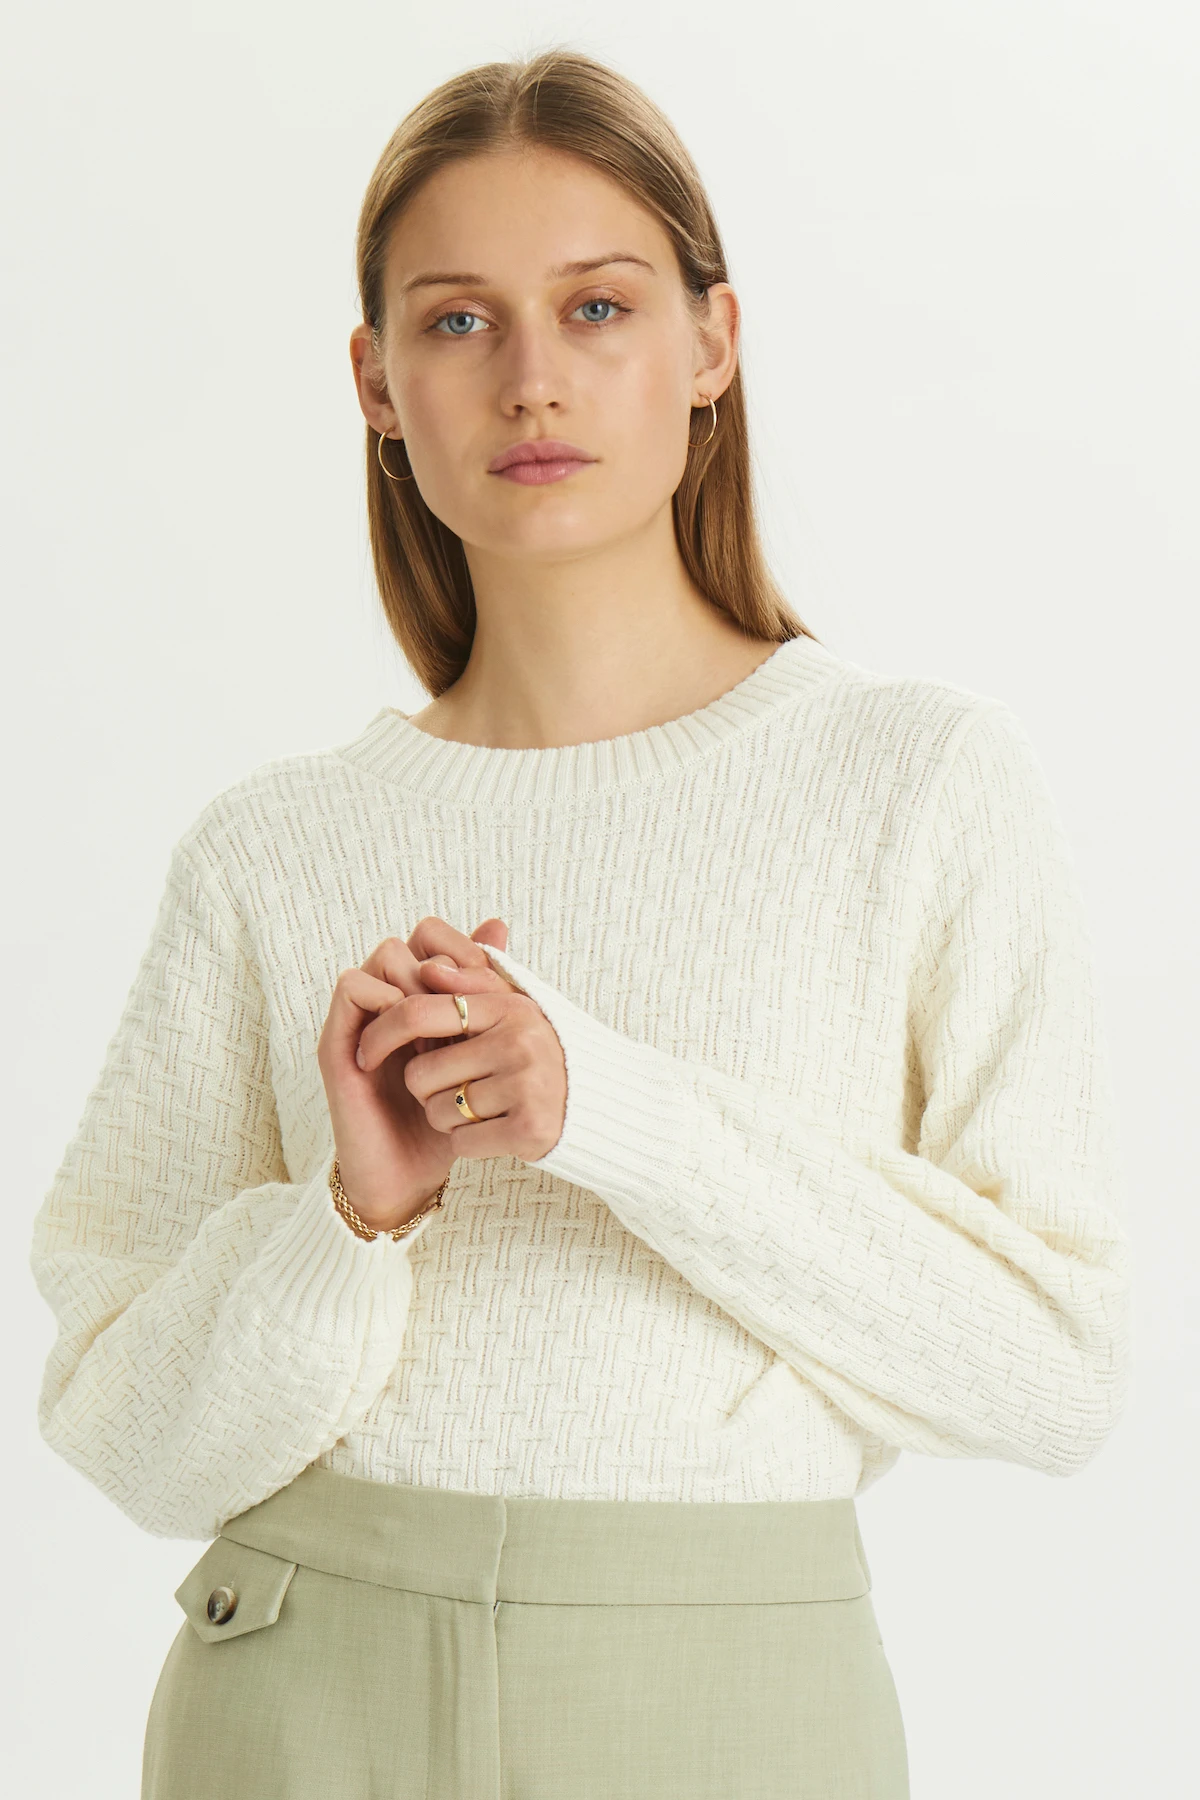 Niitawm Womens Long Sleeve Knit Cardigan Tassels Speckled Fringe Sweater Asymmetrical Hem Shawl Coat